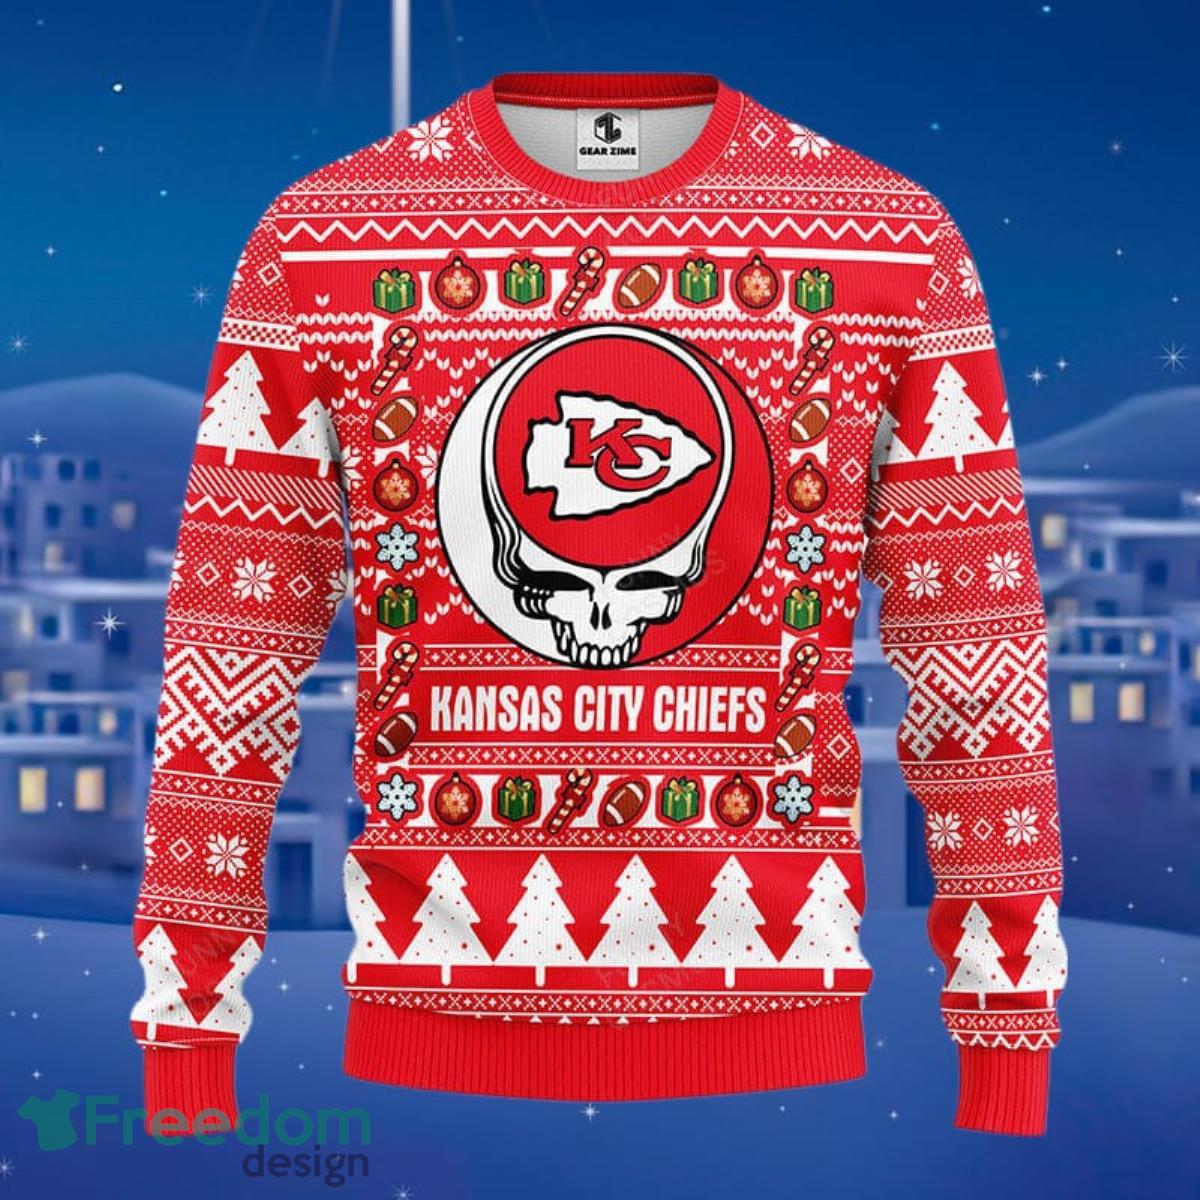 Grateful Dead Ugly Christmas Sweater Full Over Print - Freedomdesign